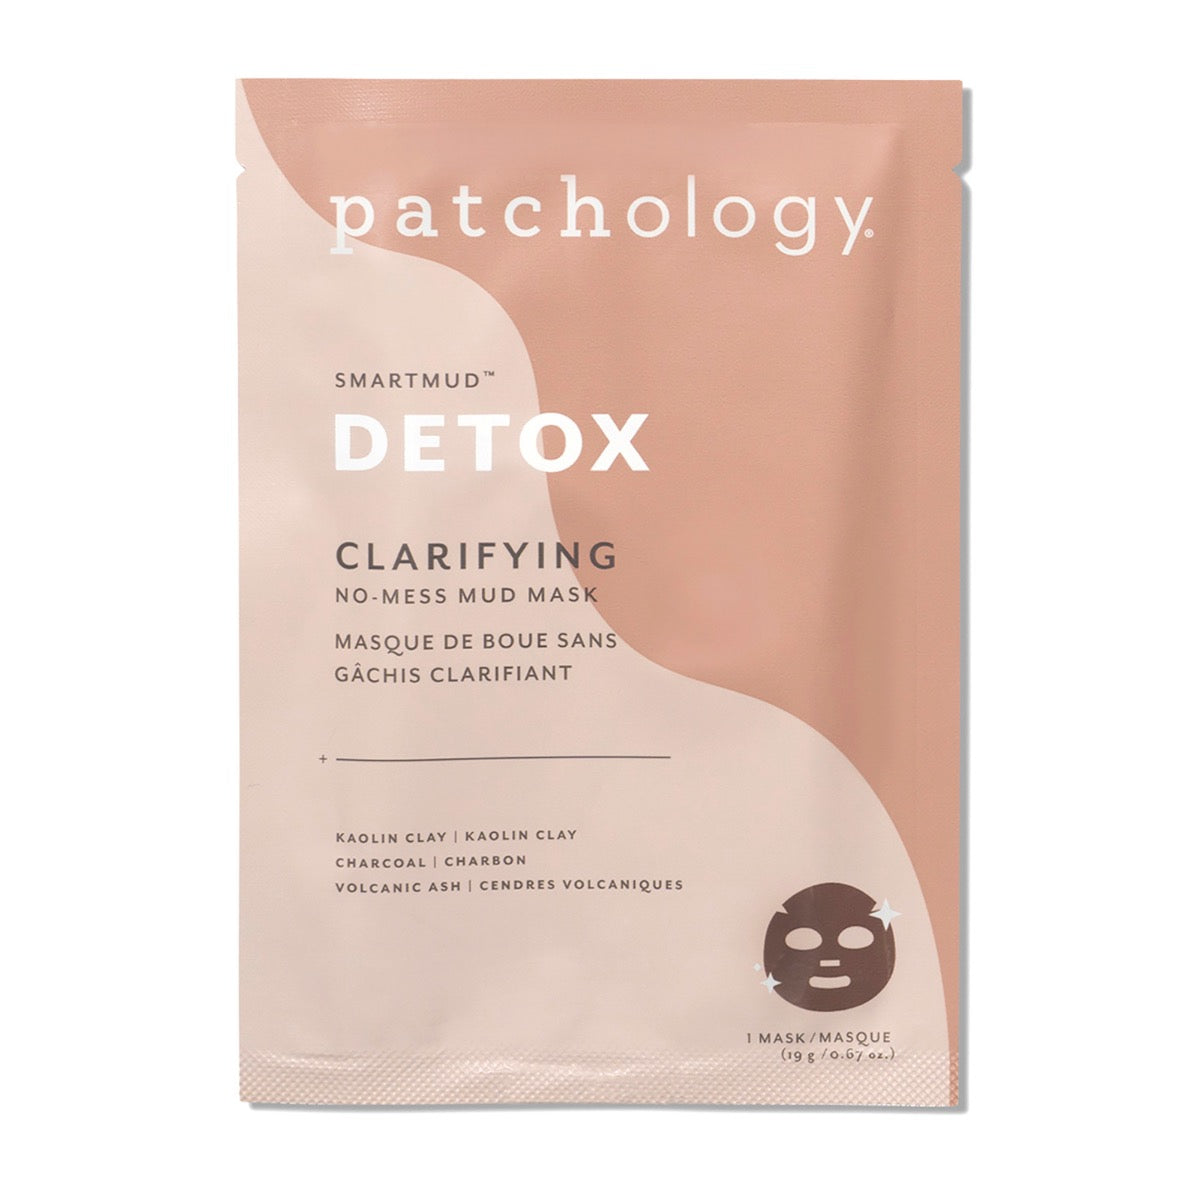 Patchology SmartMud Duo - Hydrate & Detox Set